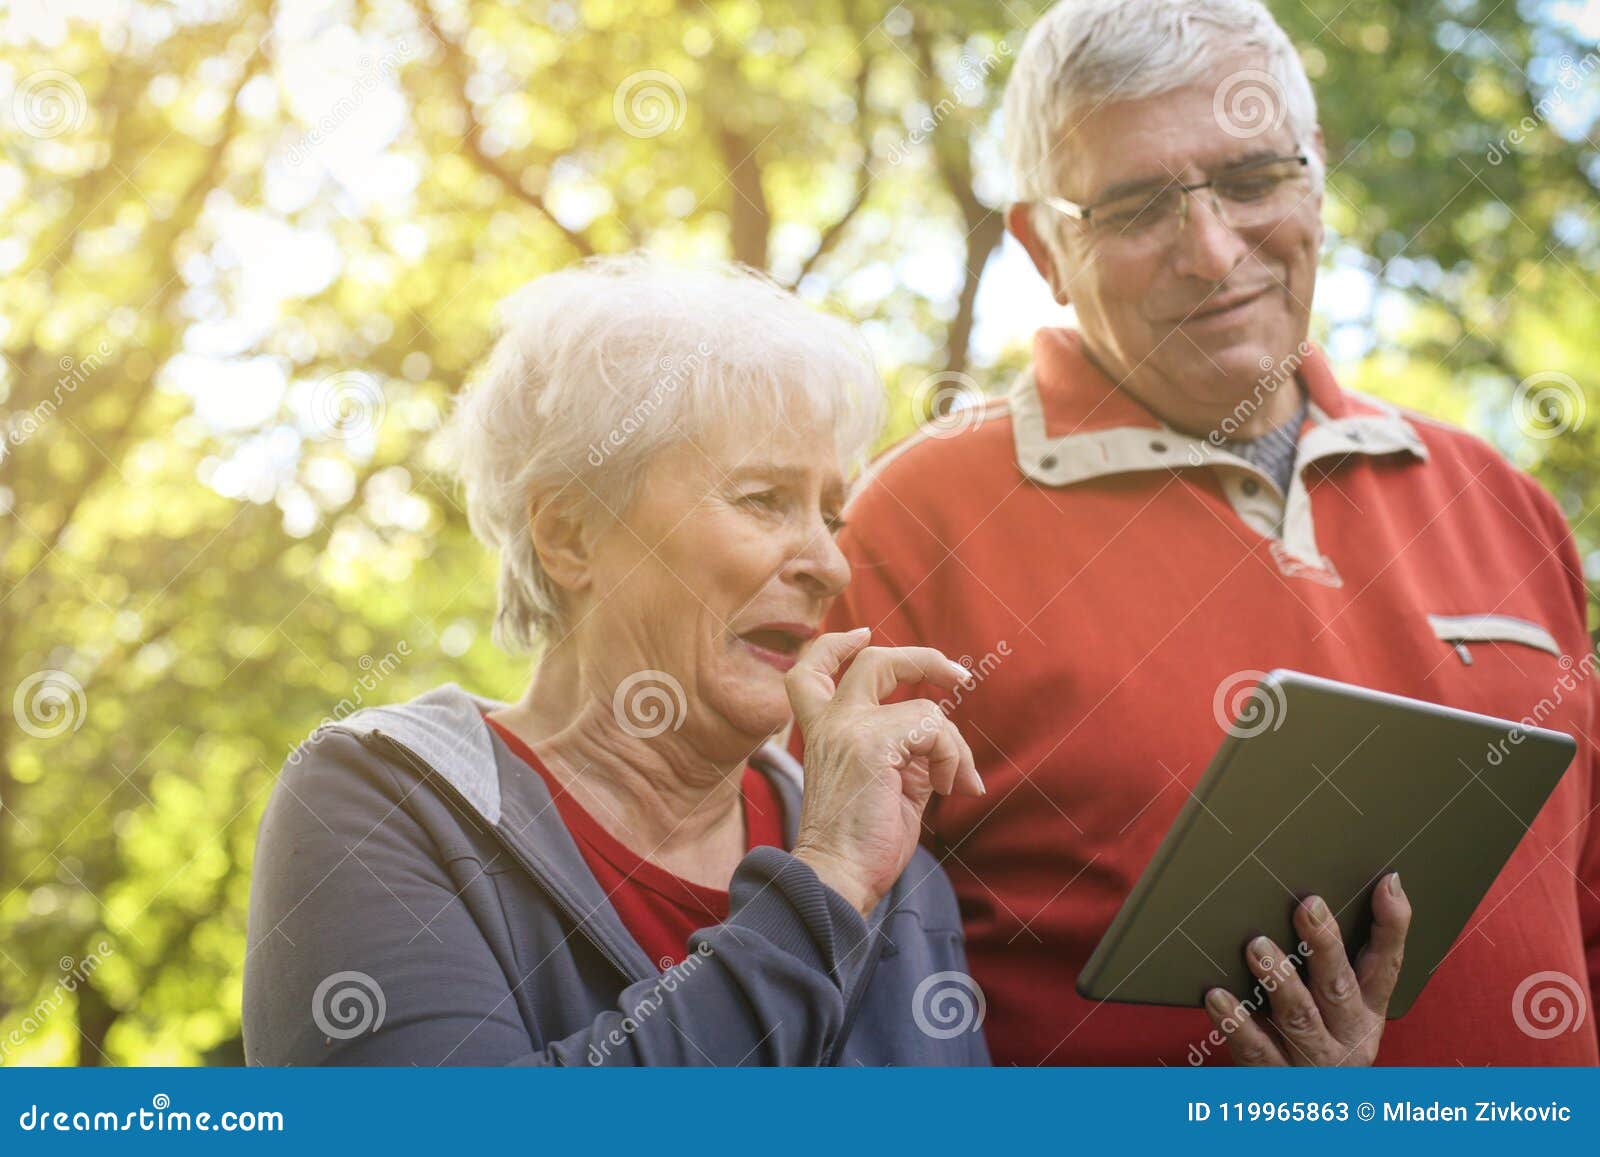 senior couple enjoying in park together and using digita